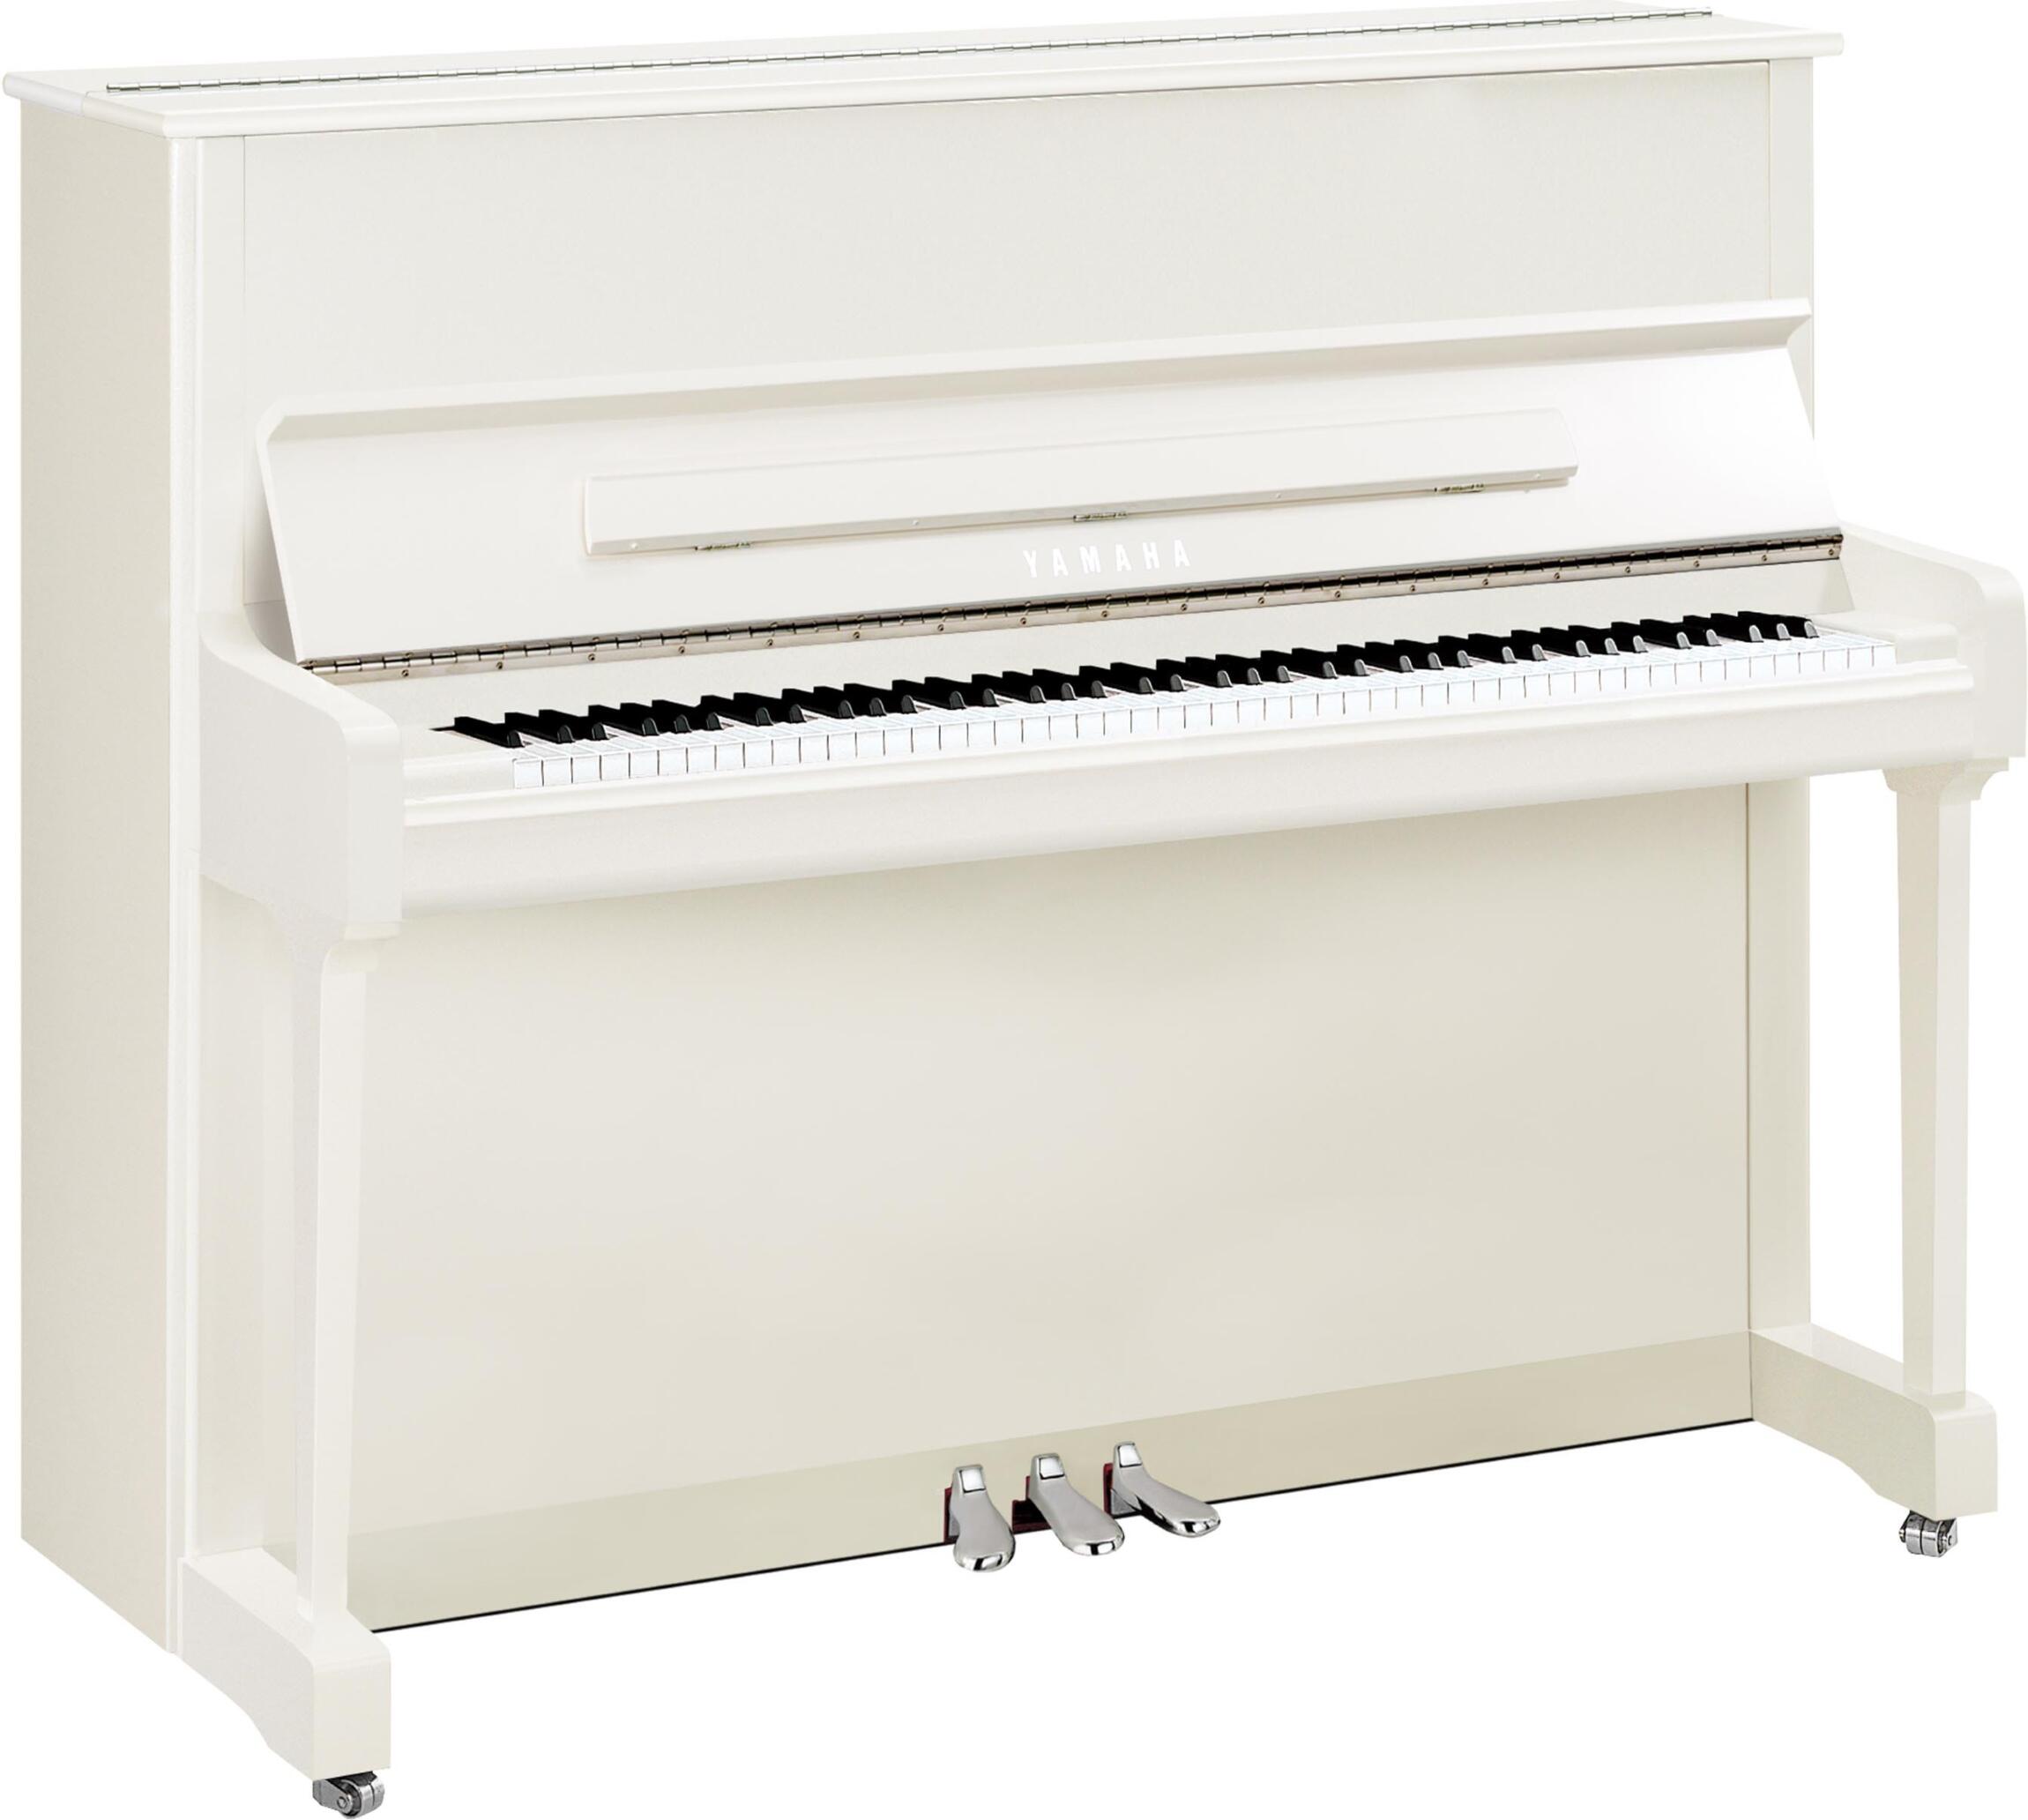 Yamaha Pianos Silent P121 SH3 PWHC Silent Blanc poli-brillant Chrome 116 cm : photo 1